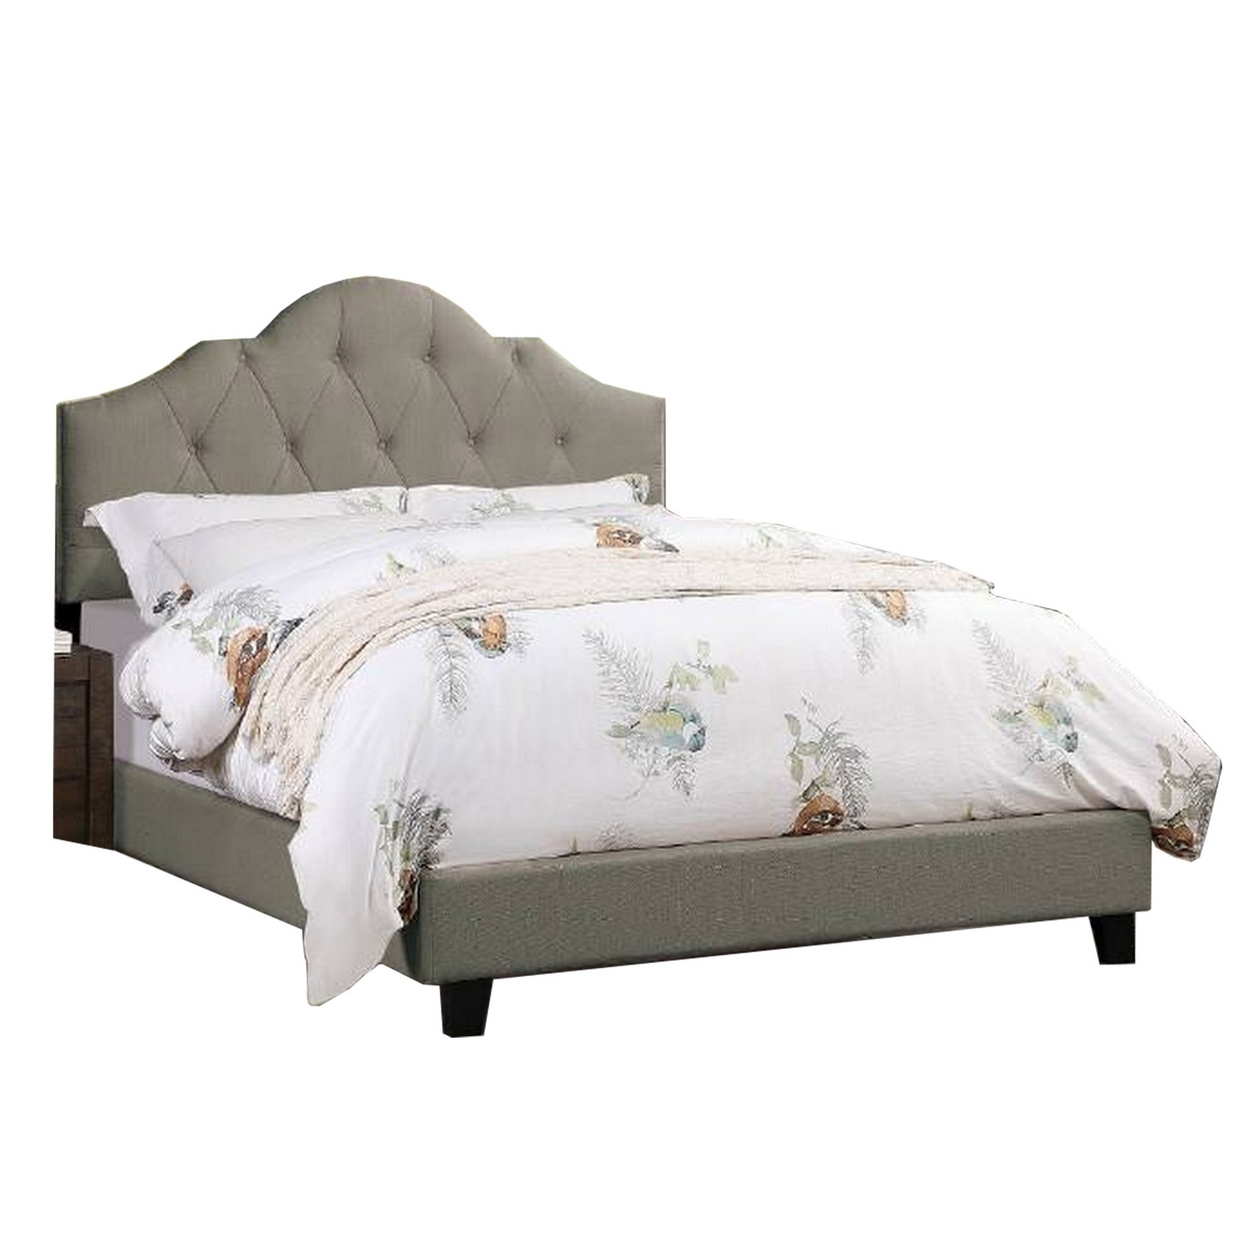 Eni Upholstered King Size Bed, Tufted Adjustable Headboard, Gray Fabric- Saltoro Sherpi